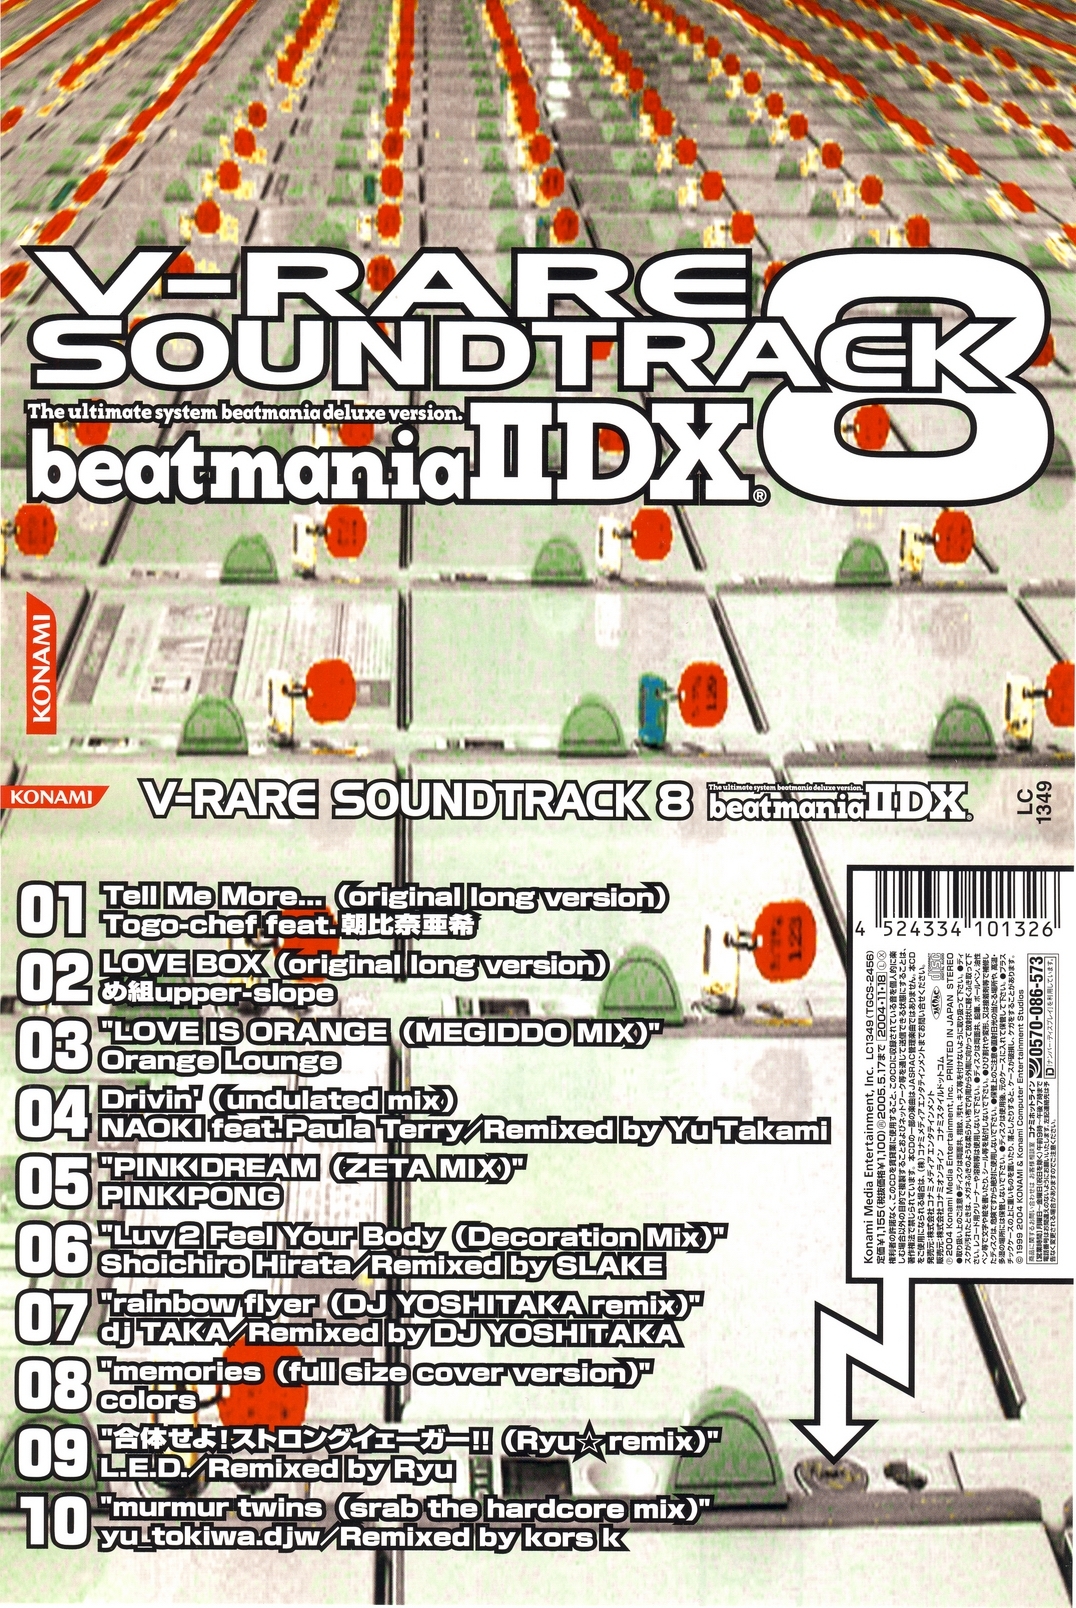 【送料無料】V-RARE SOUNDTRACK 8/CS beatmania IIDX 8th style 特別版同梱品/beatmaniaIIDX/弐寺/BEMANI/KONAMI/SOUND TRACK